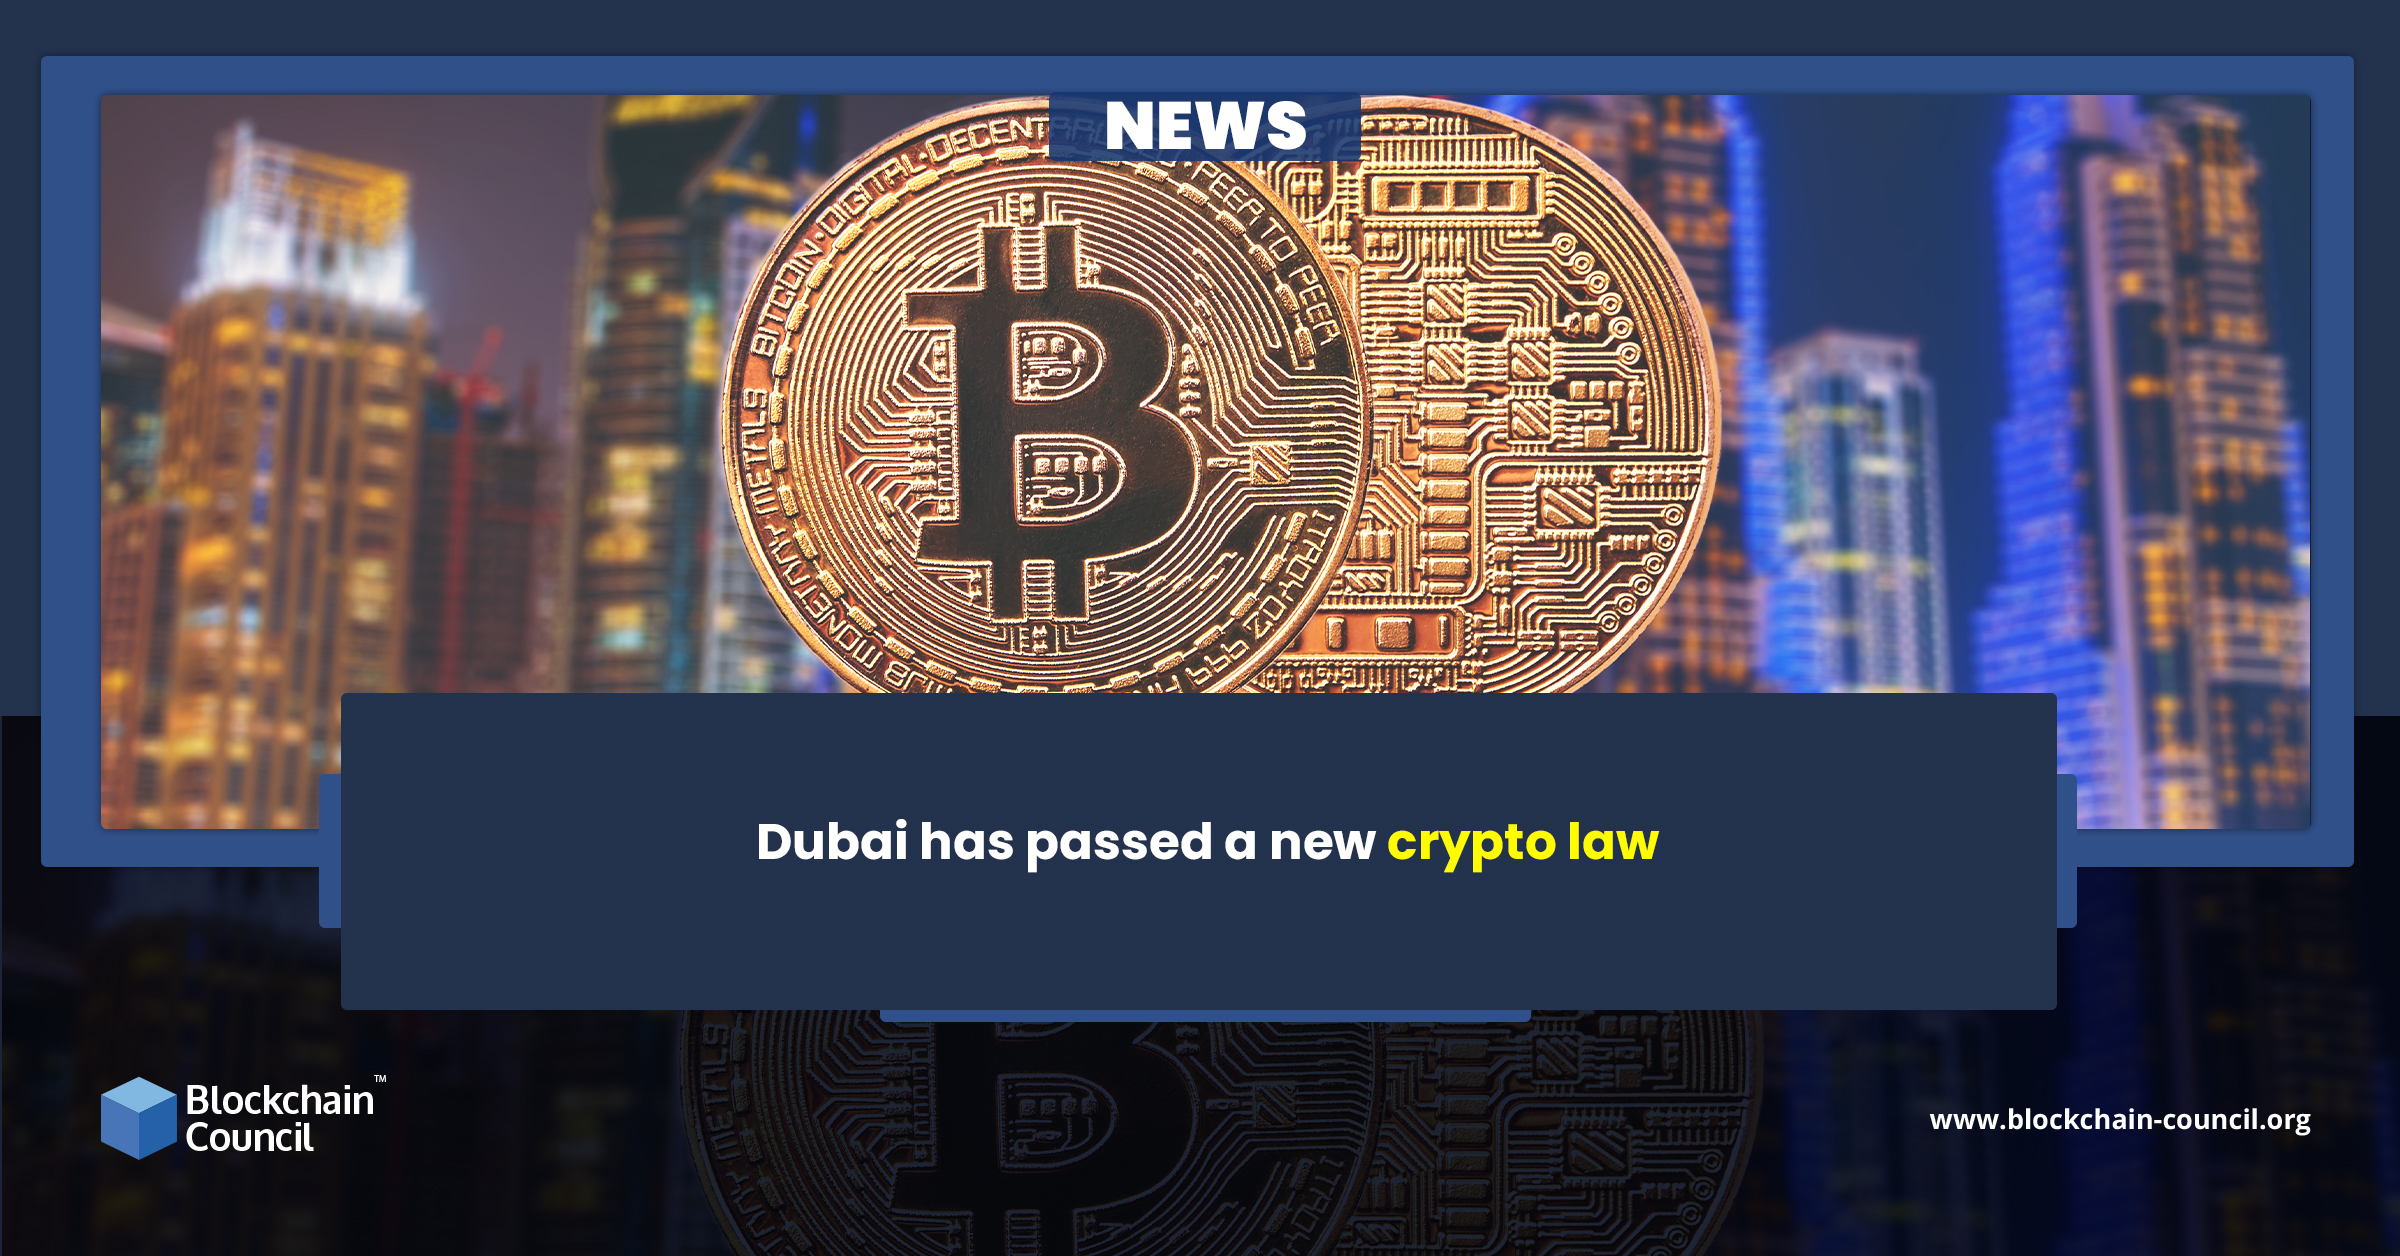 Dubai has passed a new crypto law